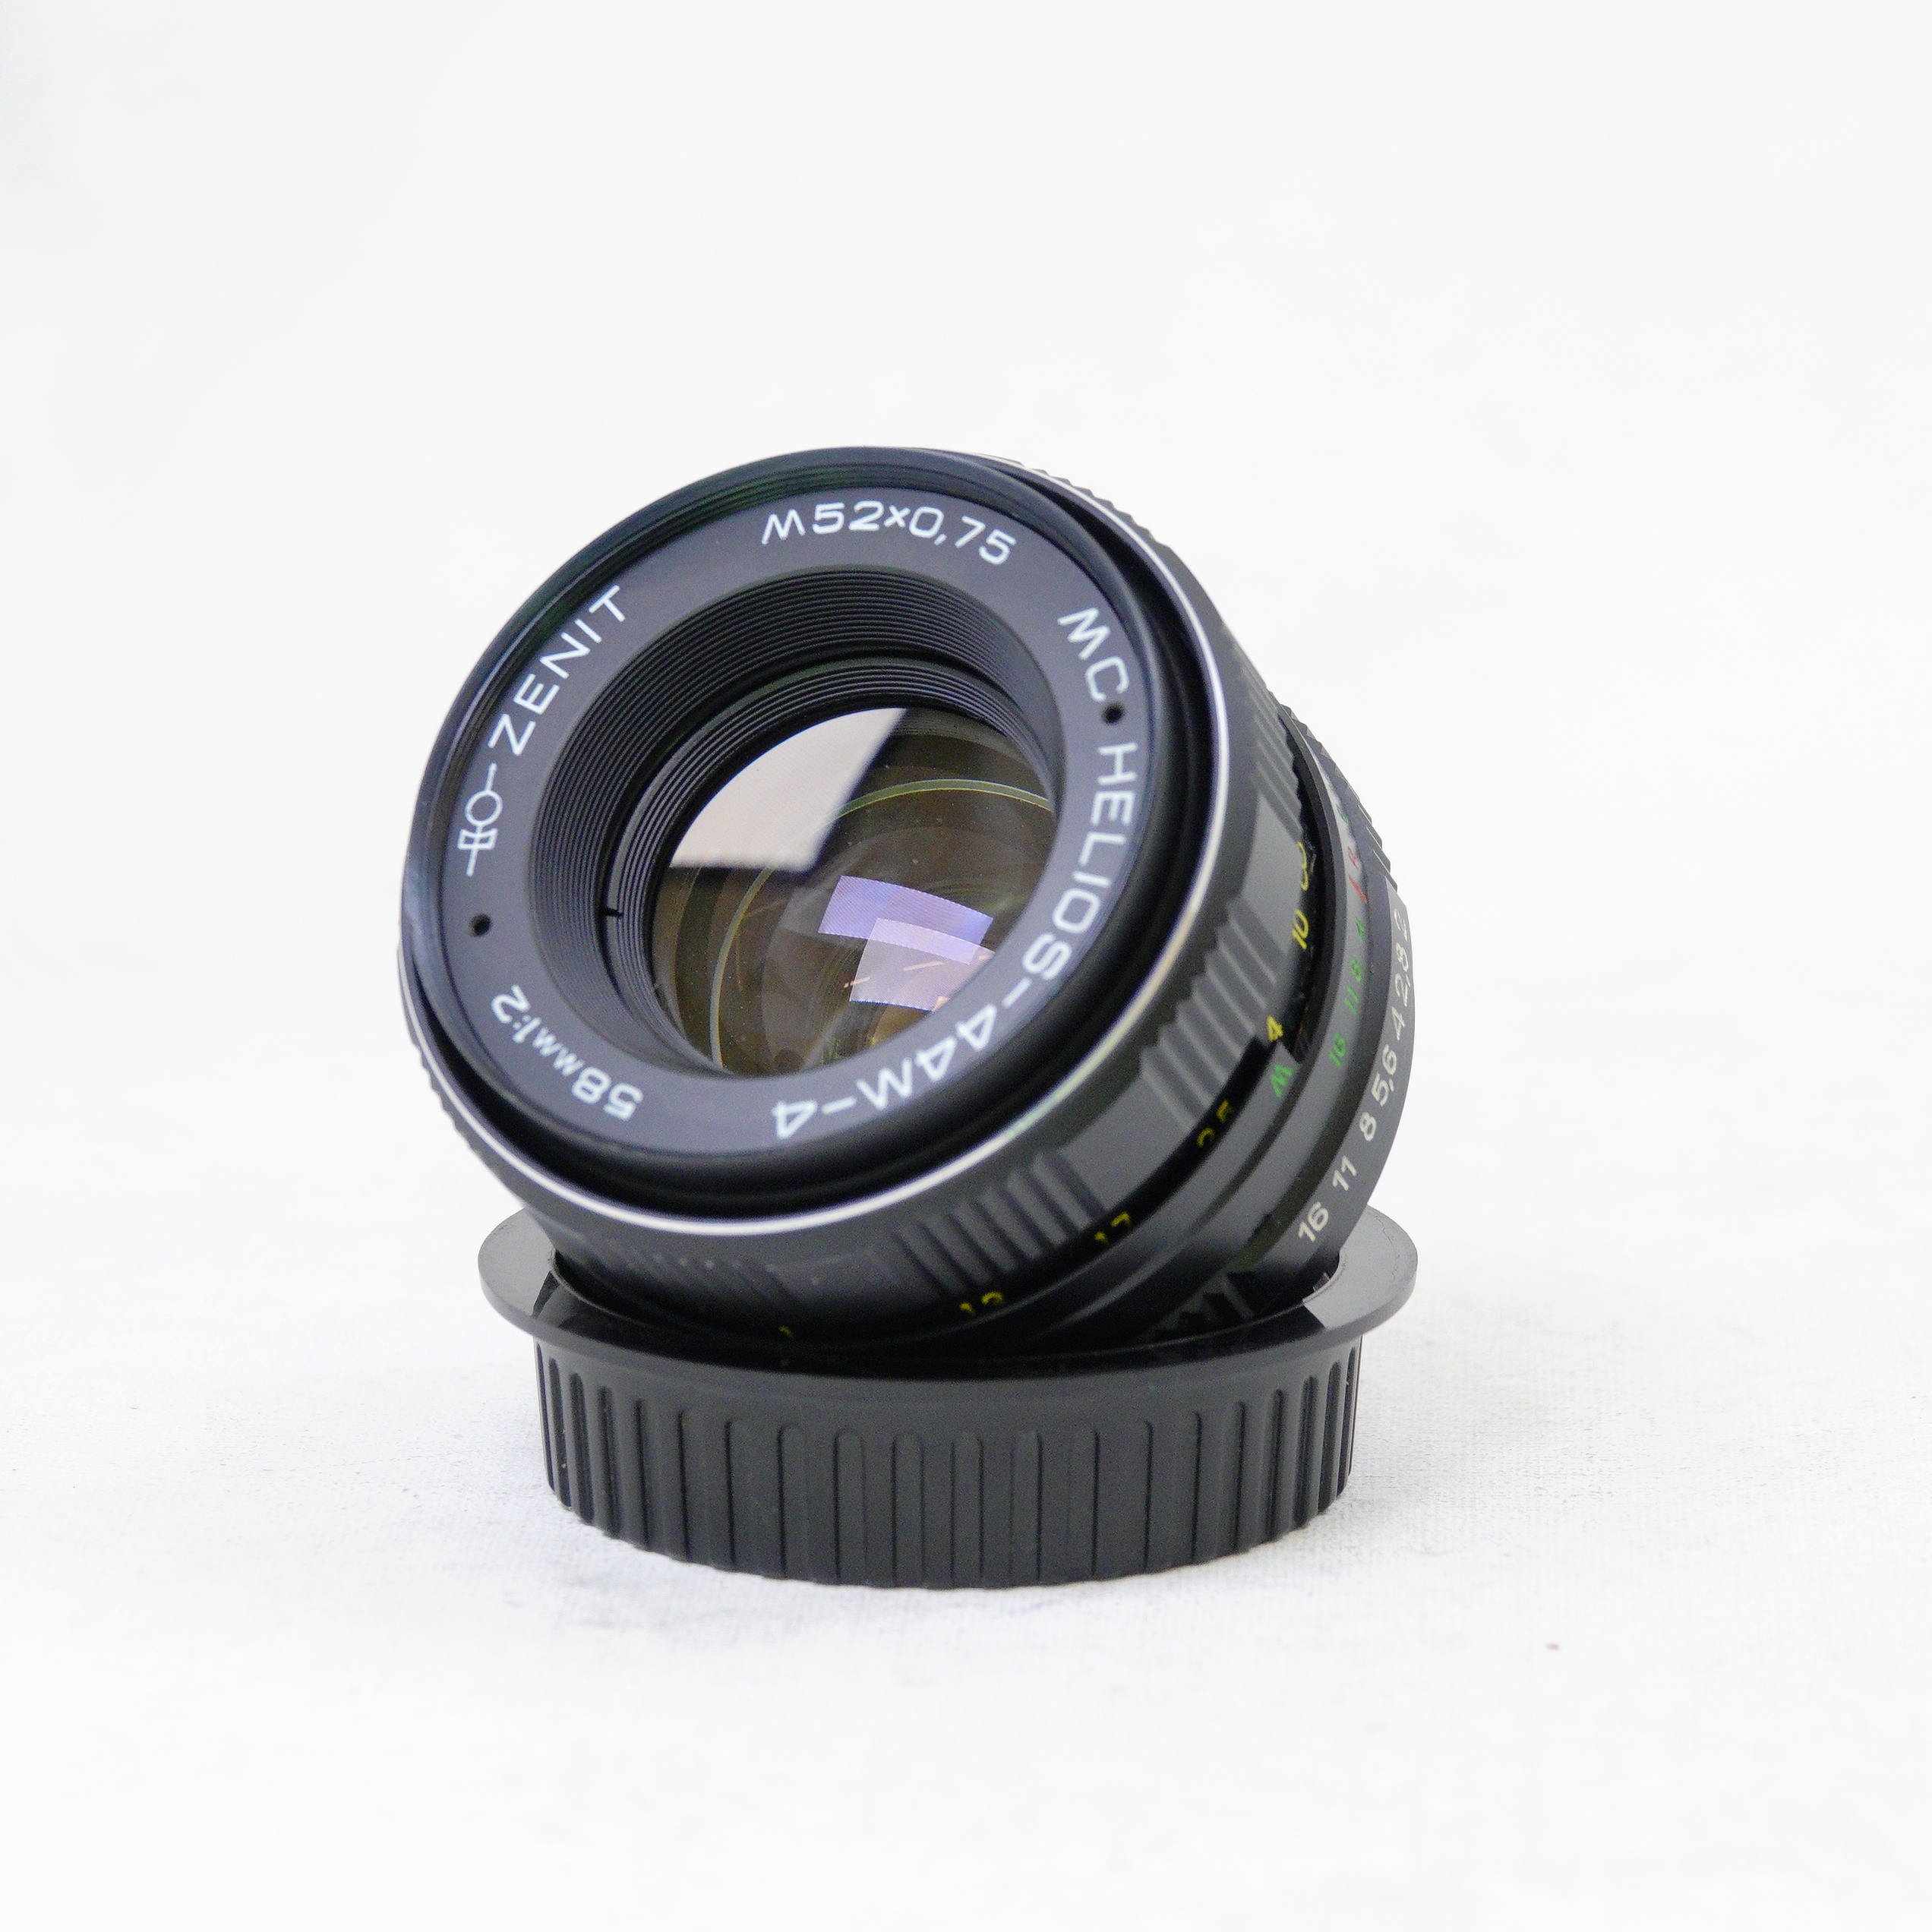 Zenit Helios 44M-4 58mm f2 con Adaptador para montura Canon EF - Usado